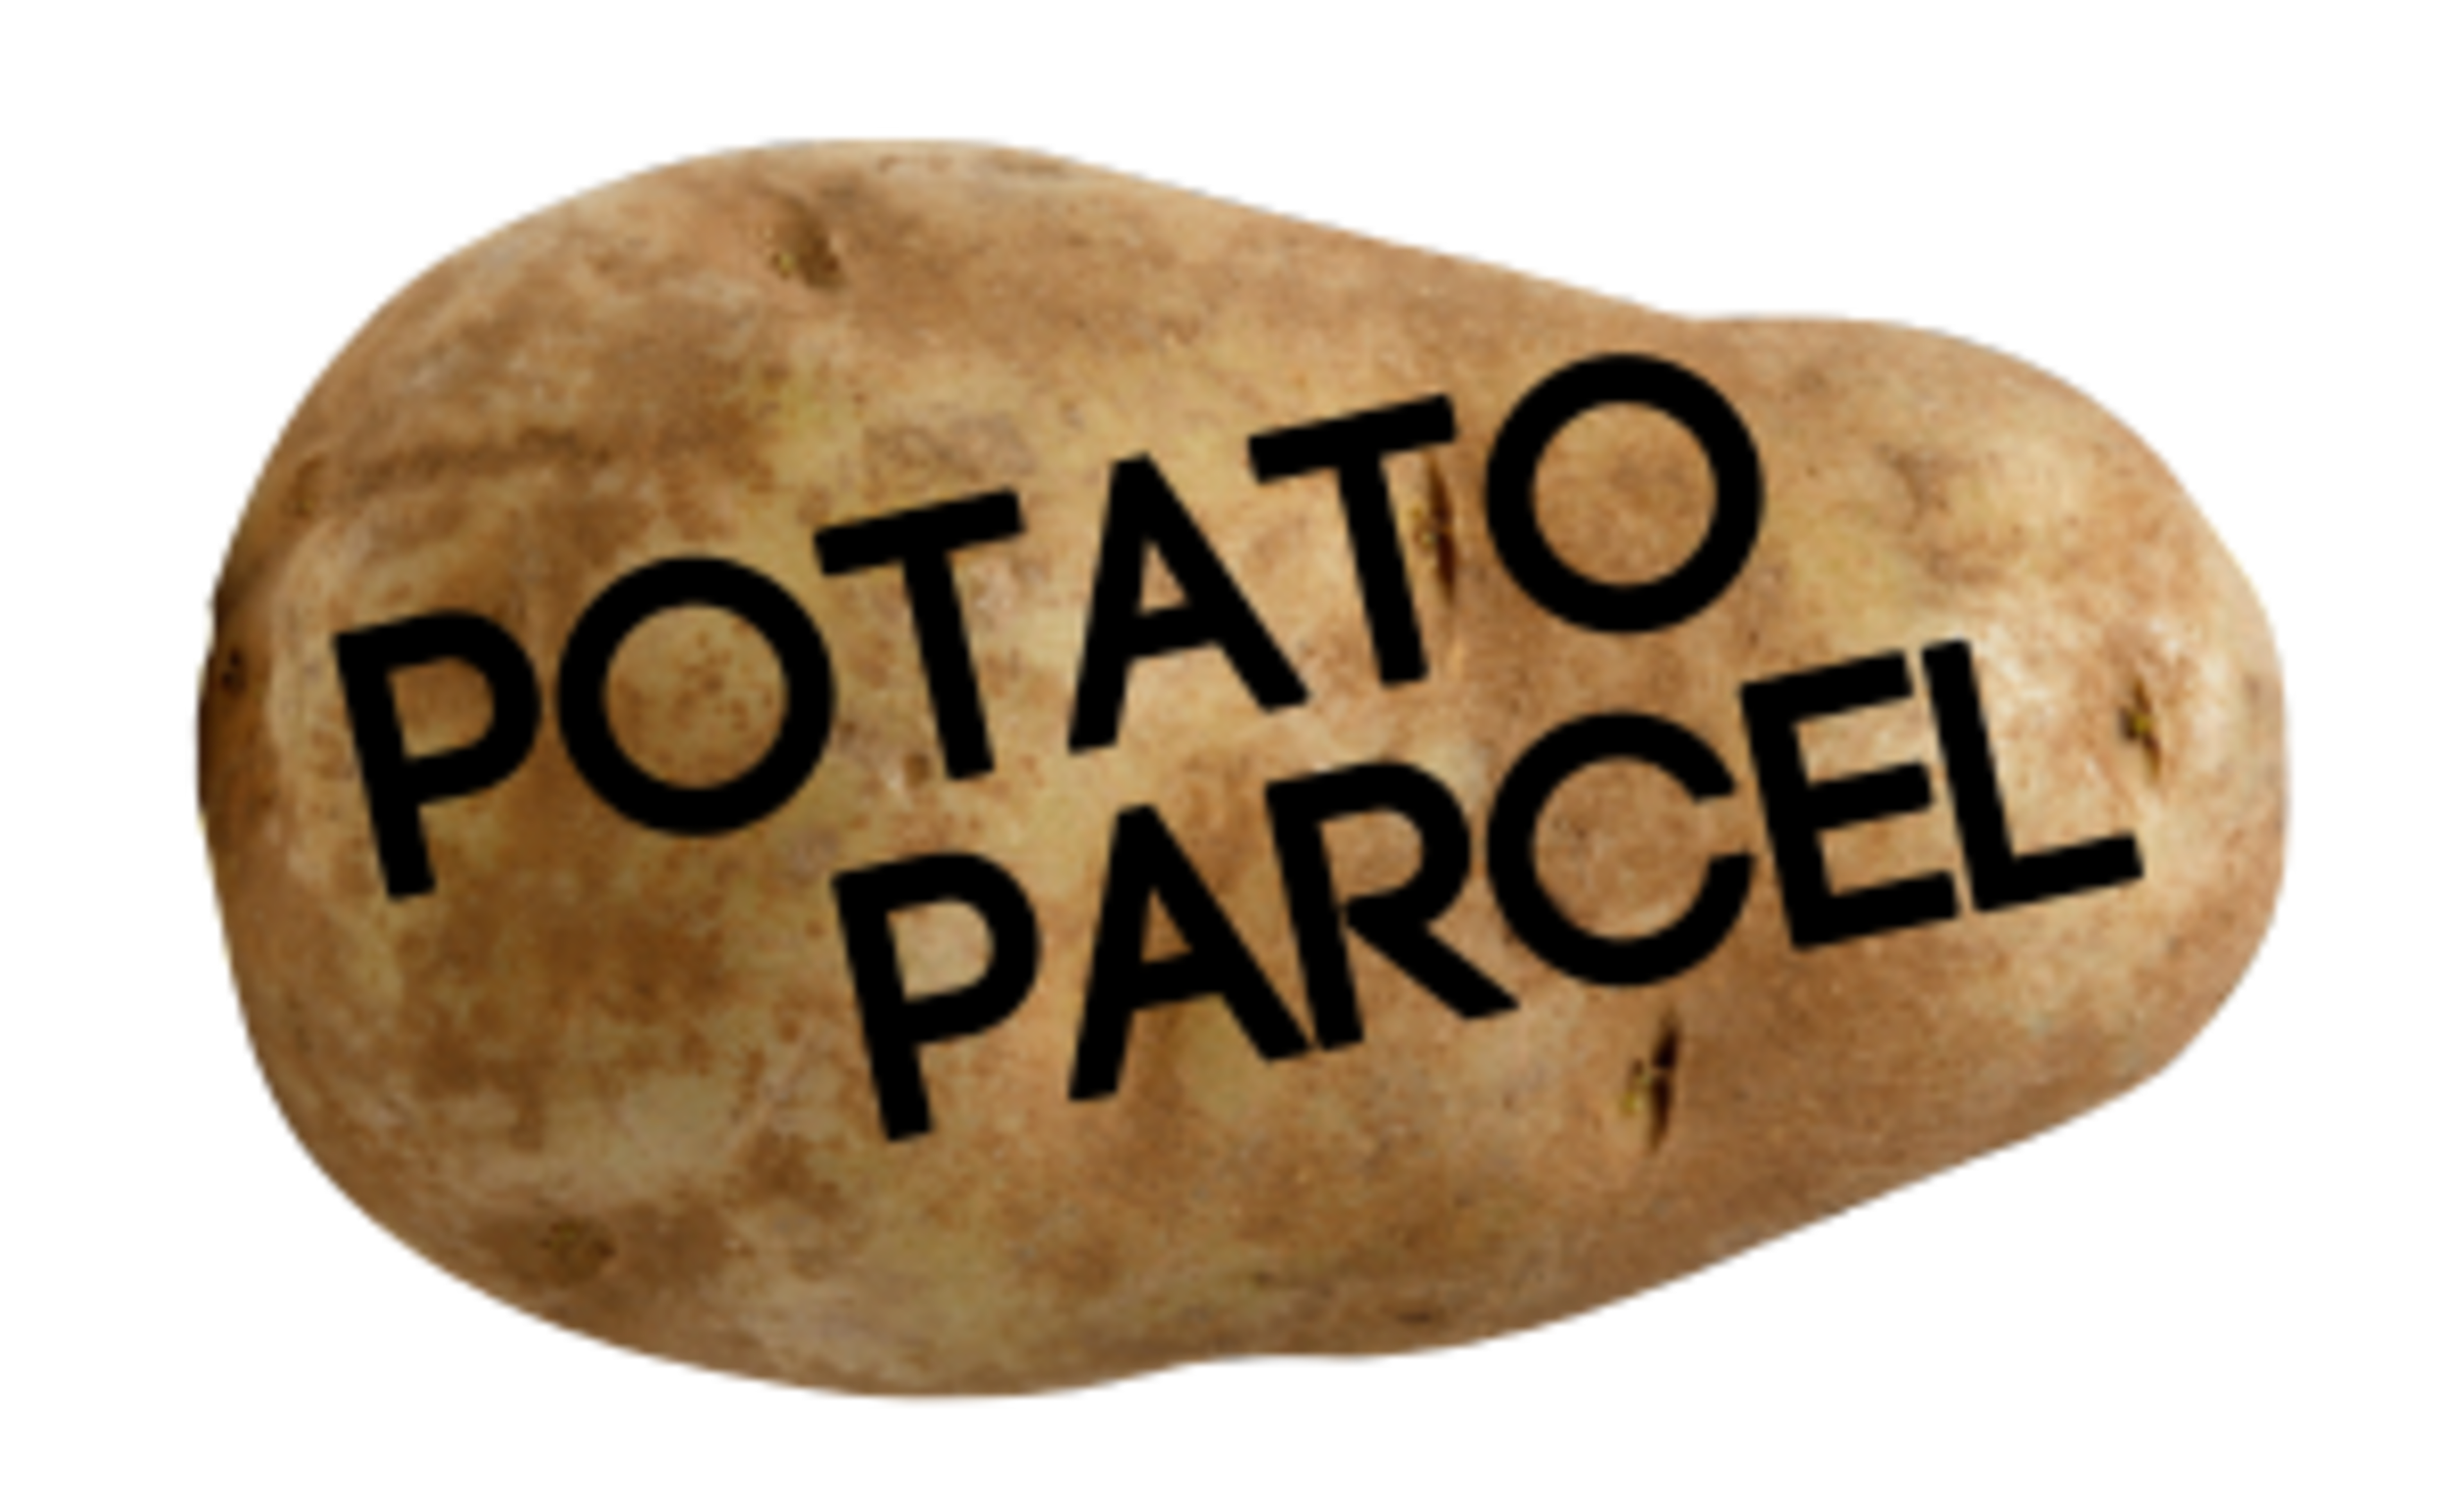 Potato ParcelCode